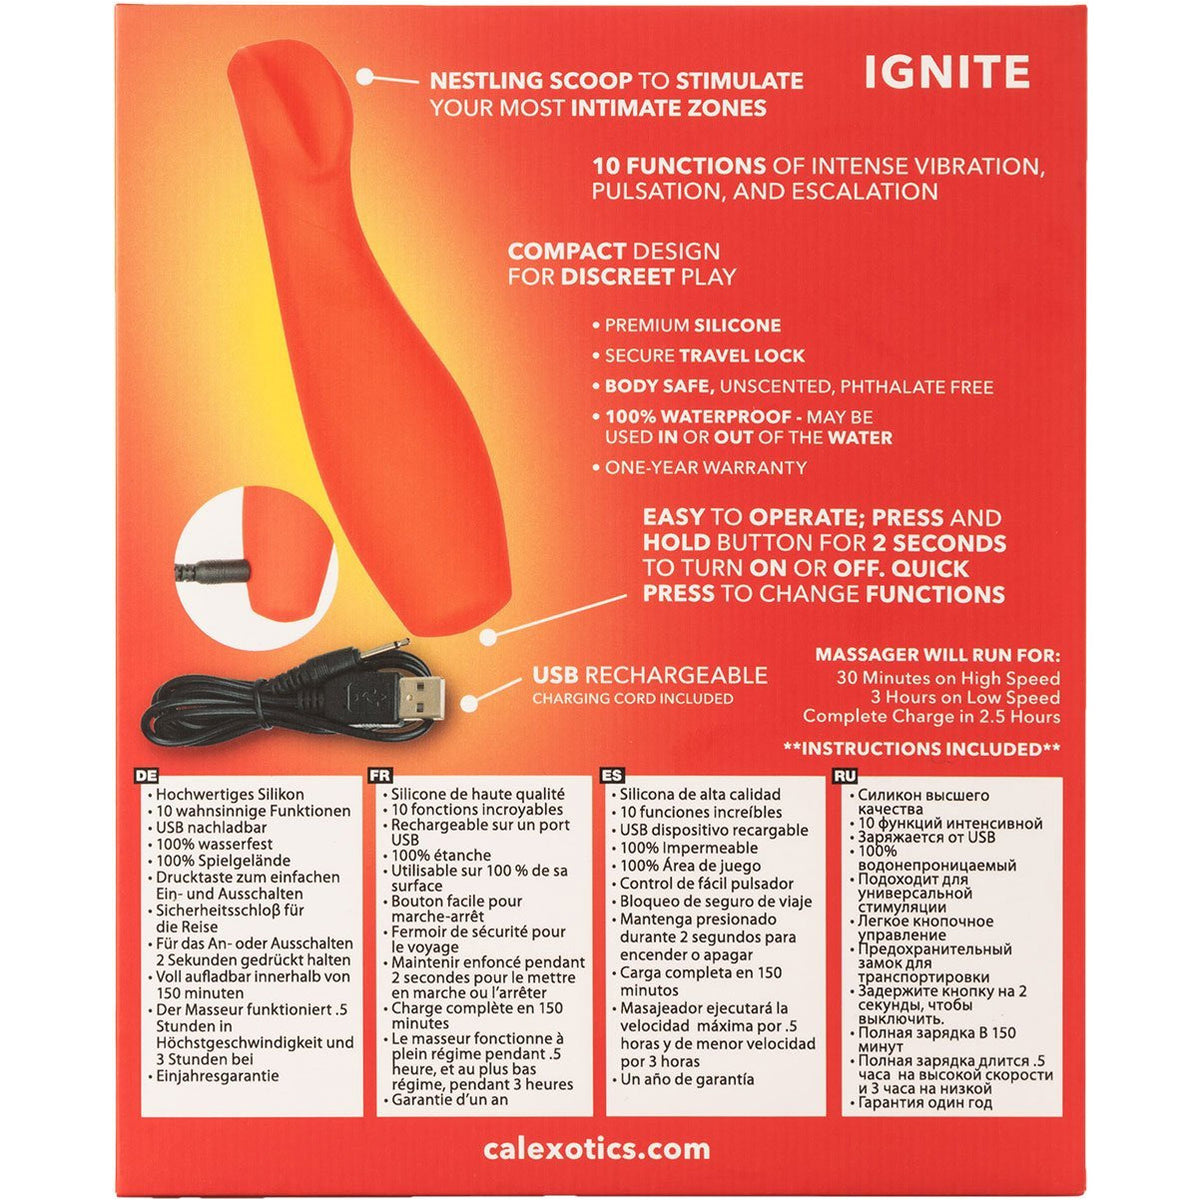 CalExotics Red Hot - Ignite